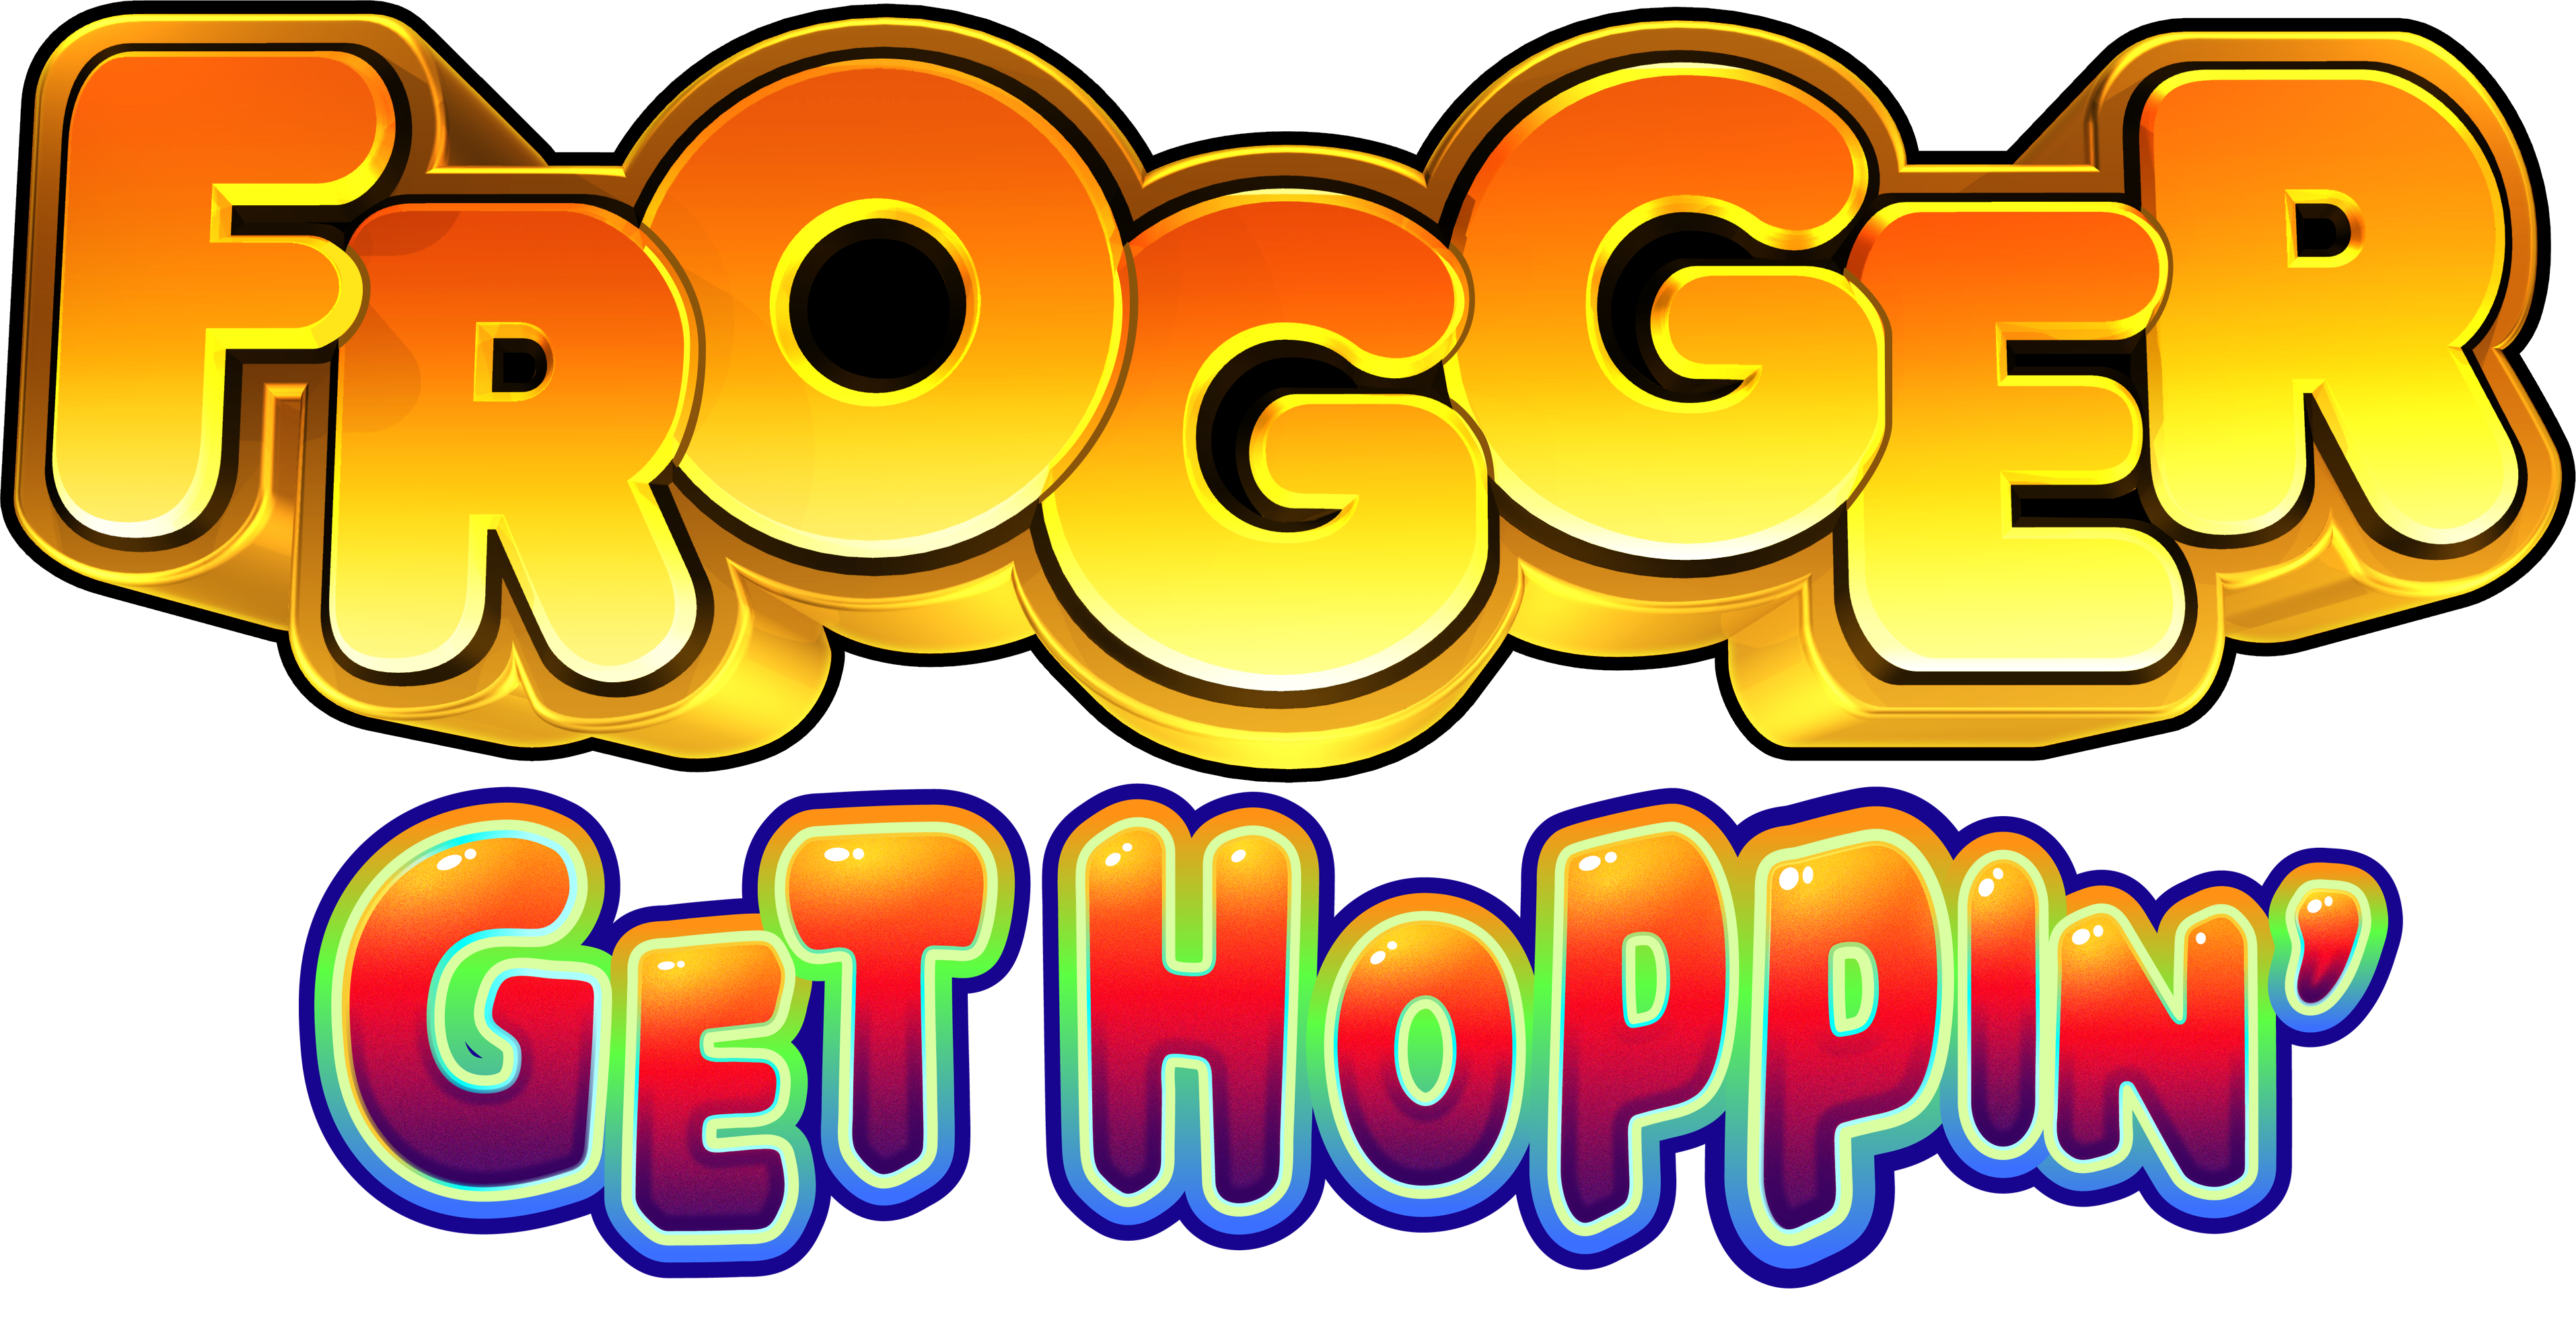 Frogger Get Hoppin Logo